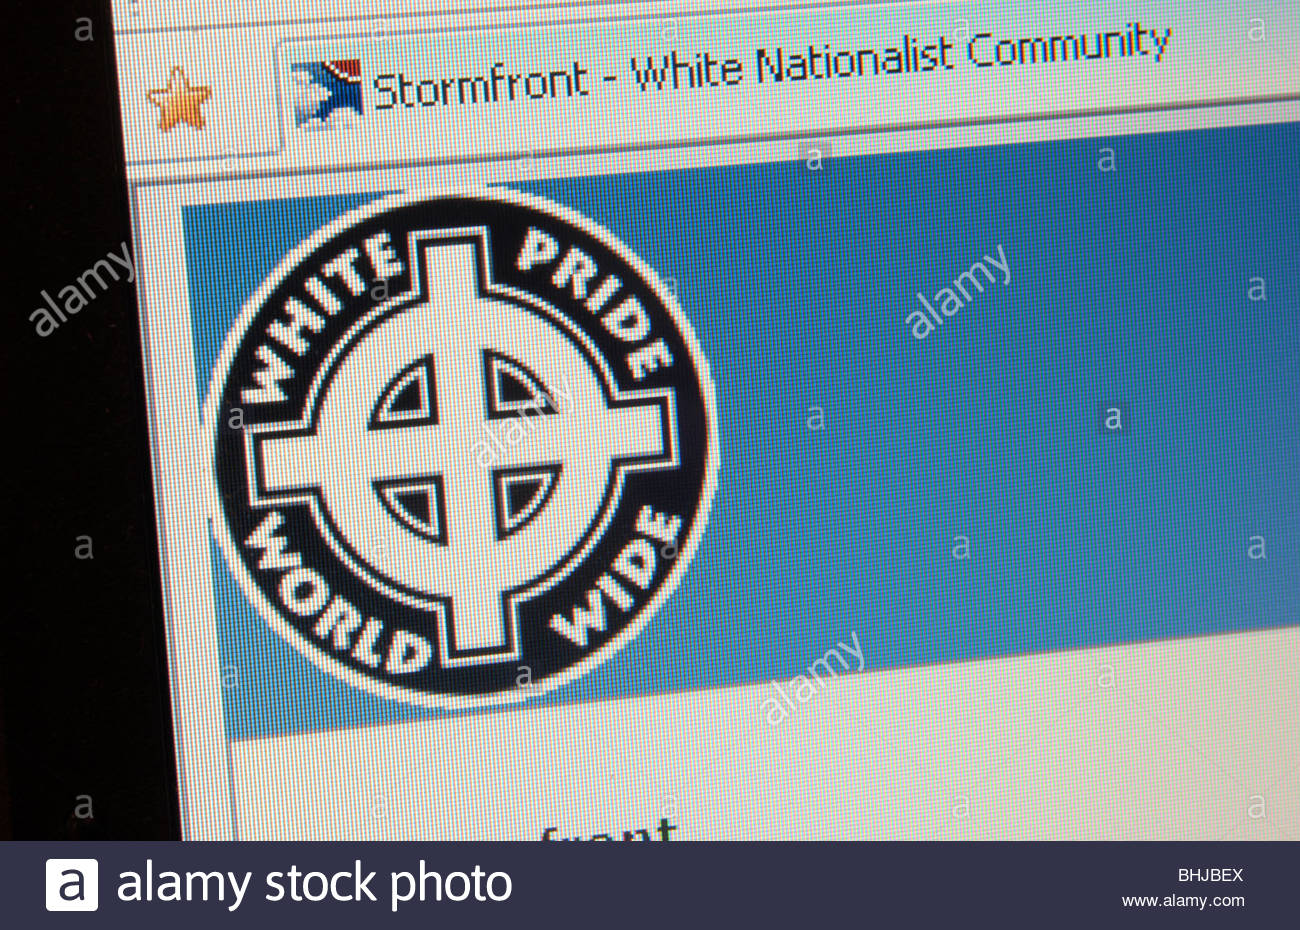 stormfrontorg white nationalist chat forum BHJBEX